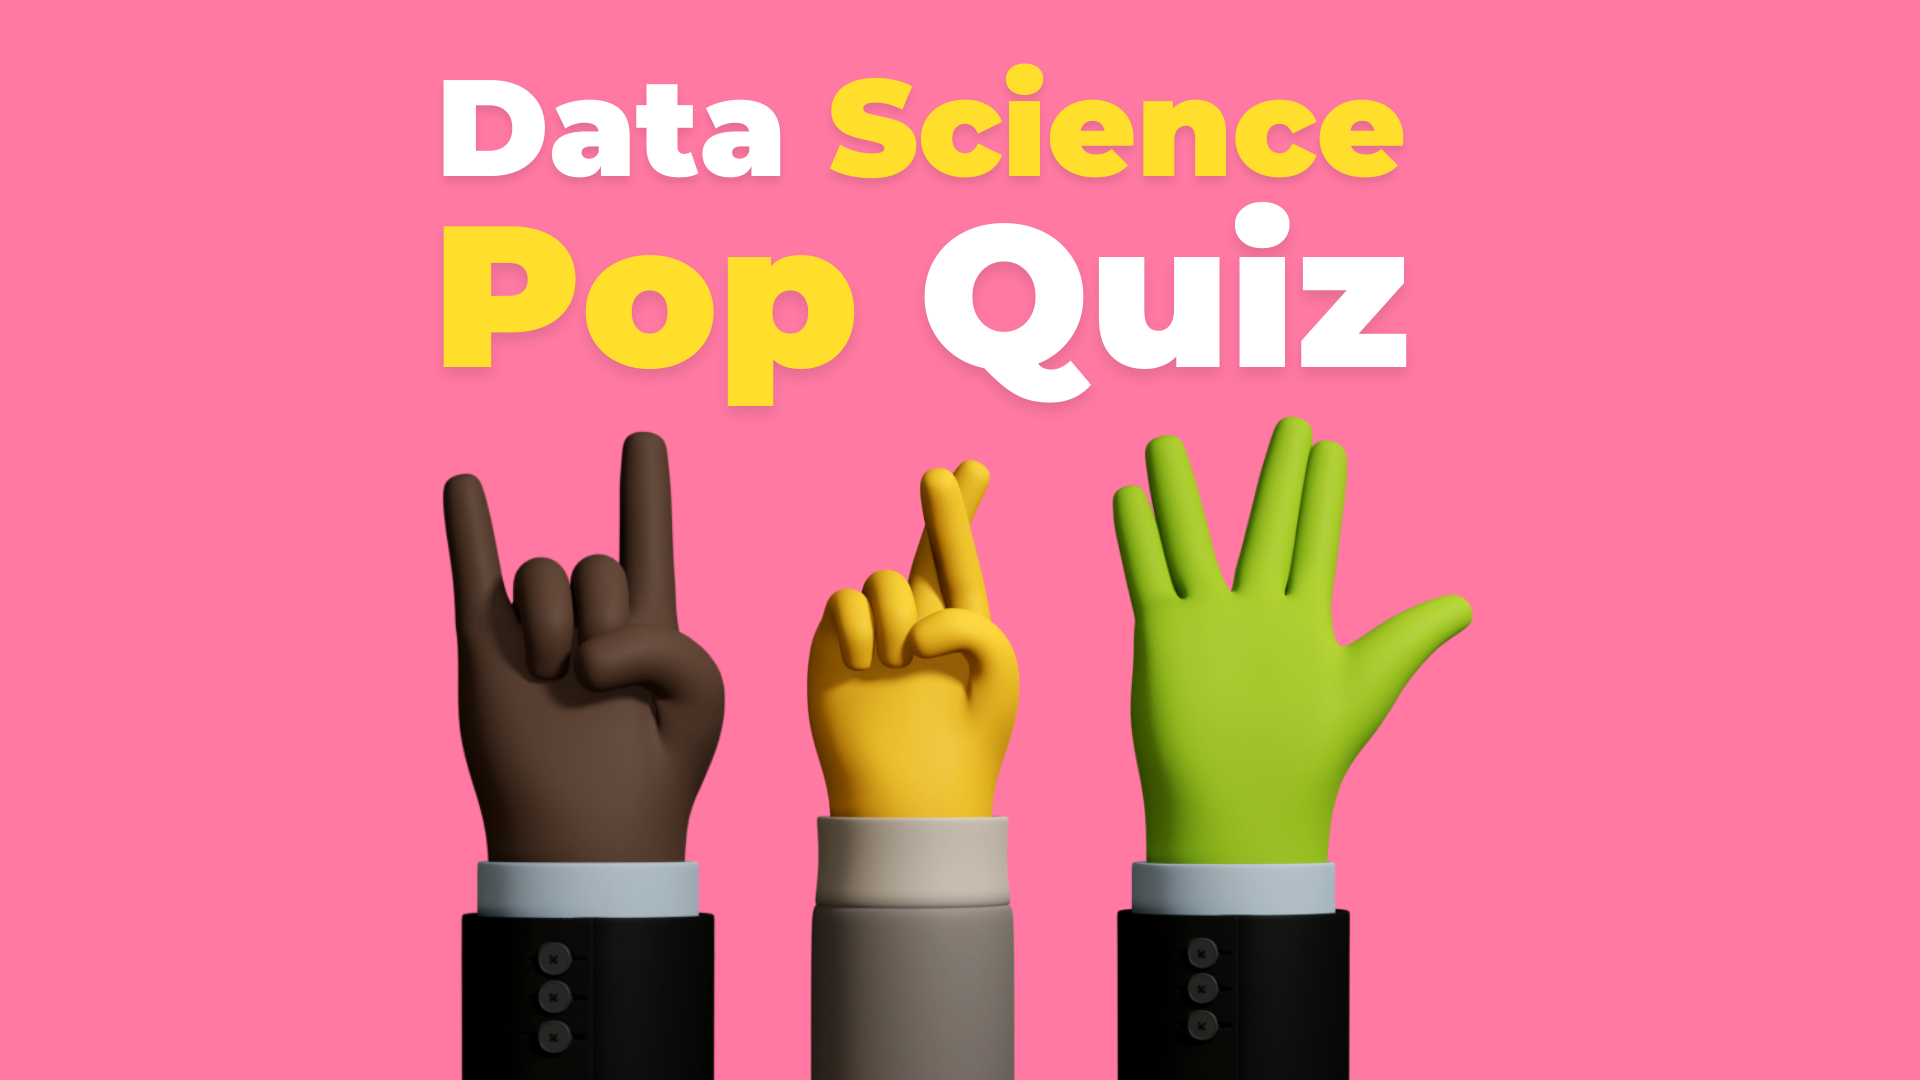 Image of hands raised under the words "Pop Quiz"